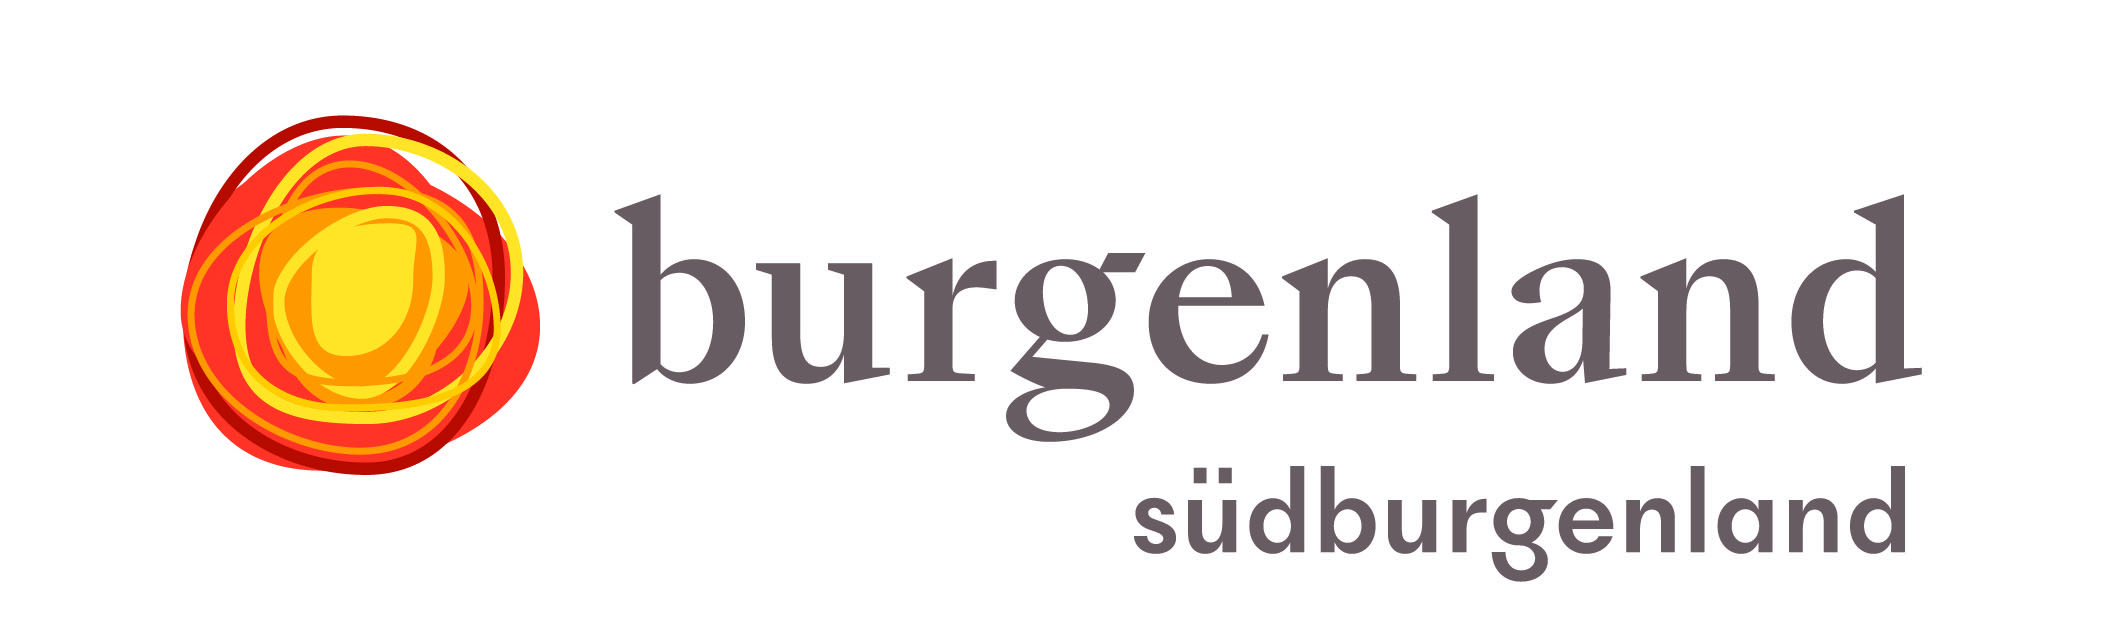 Südburgenland Info - Logo